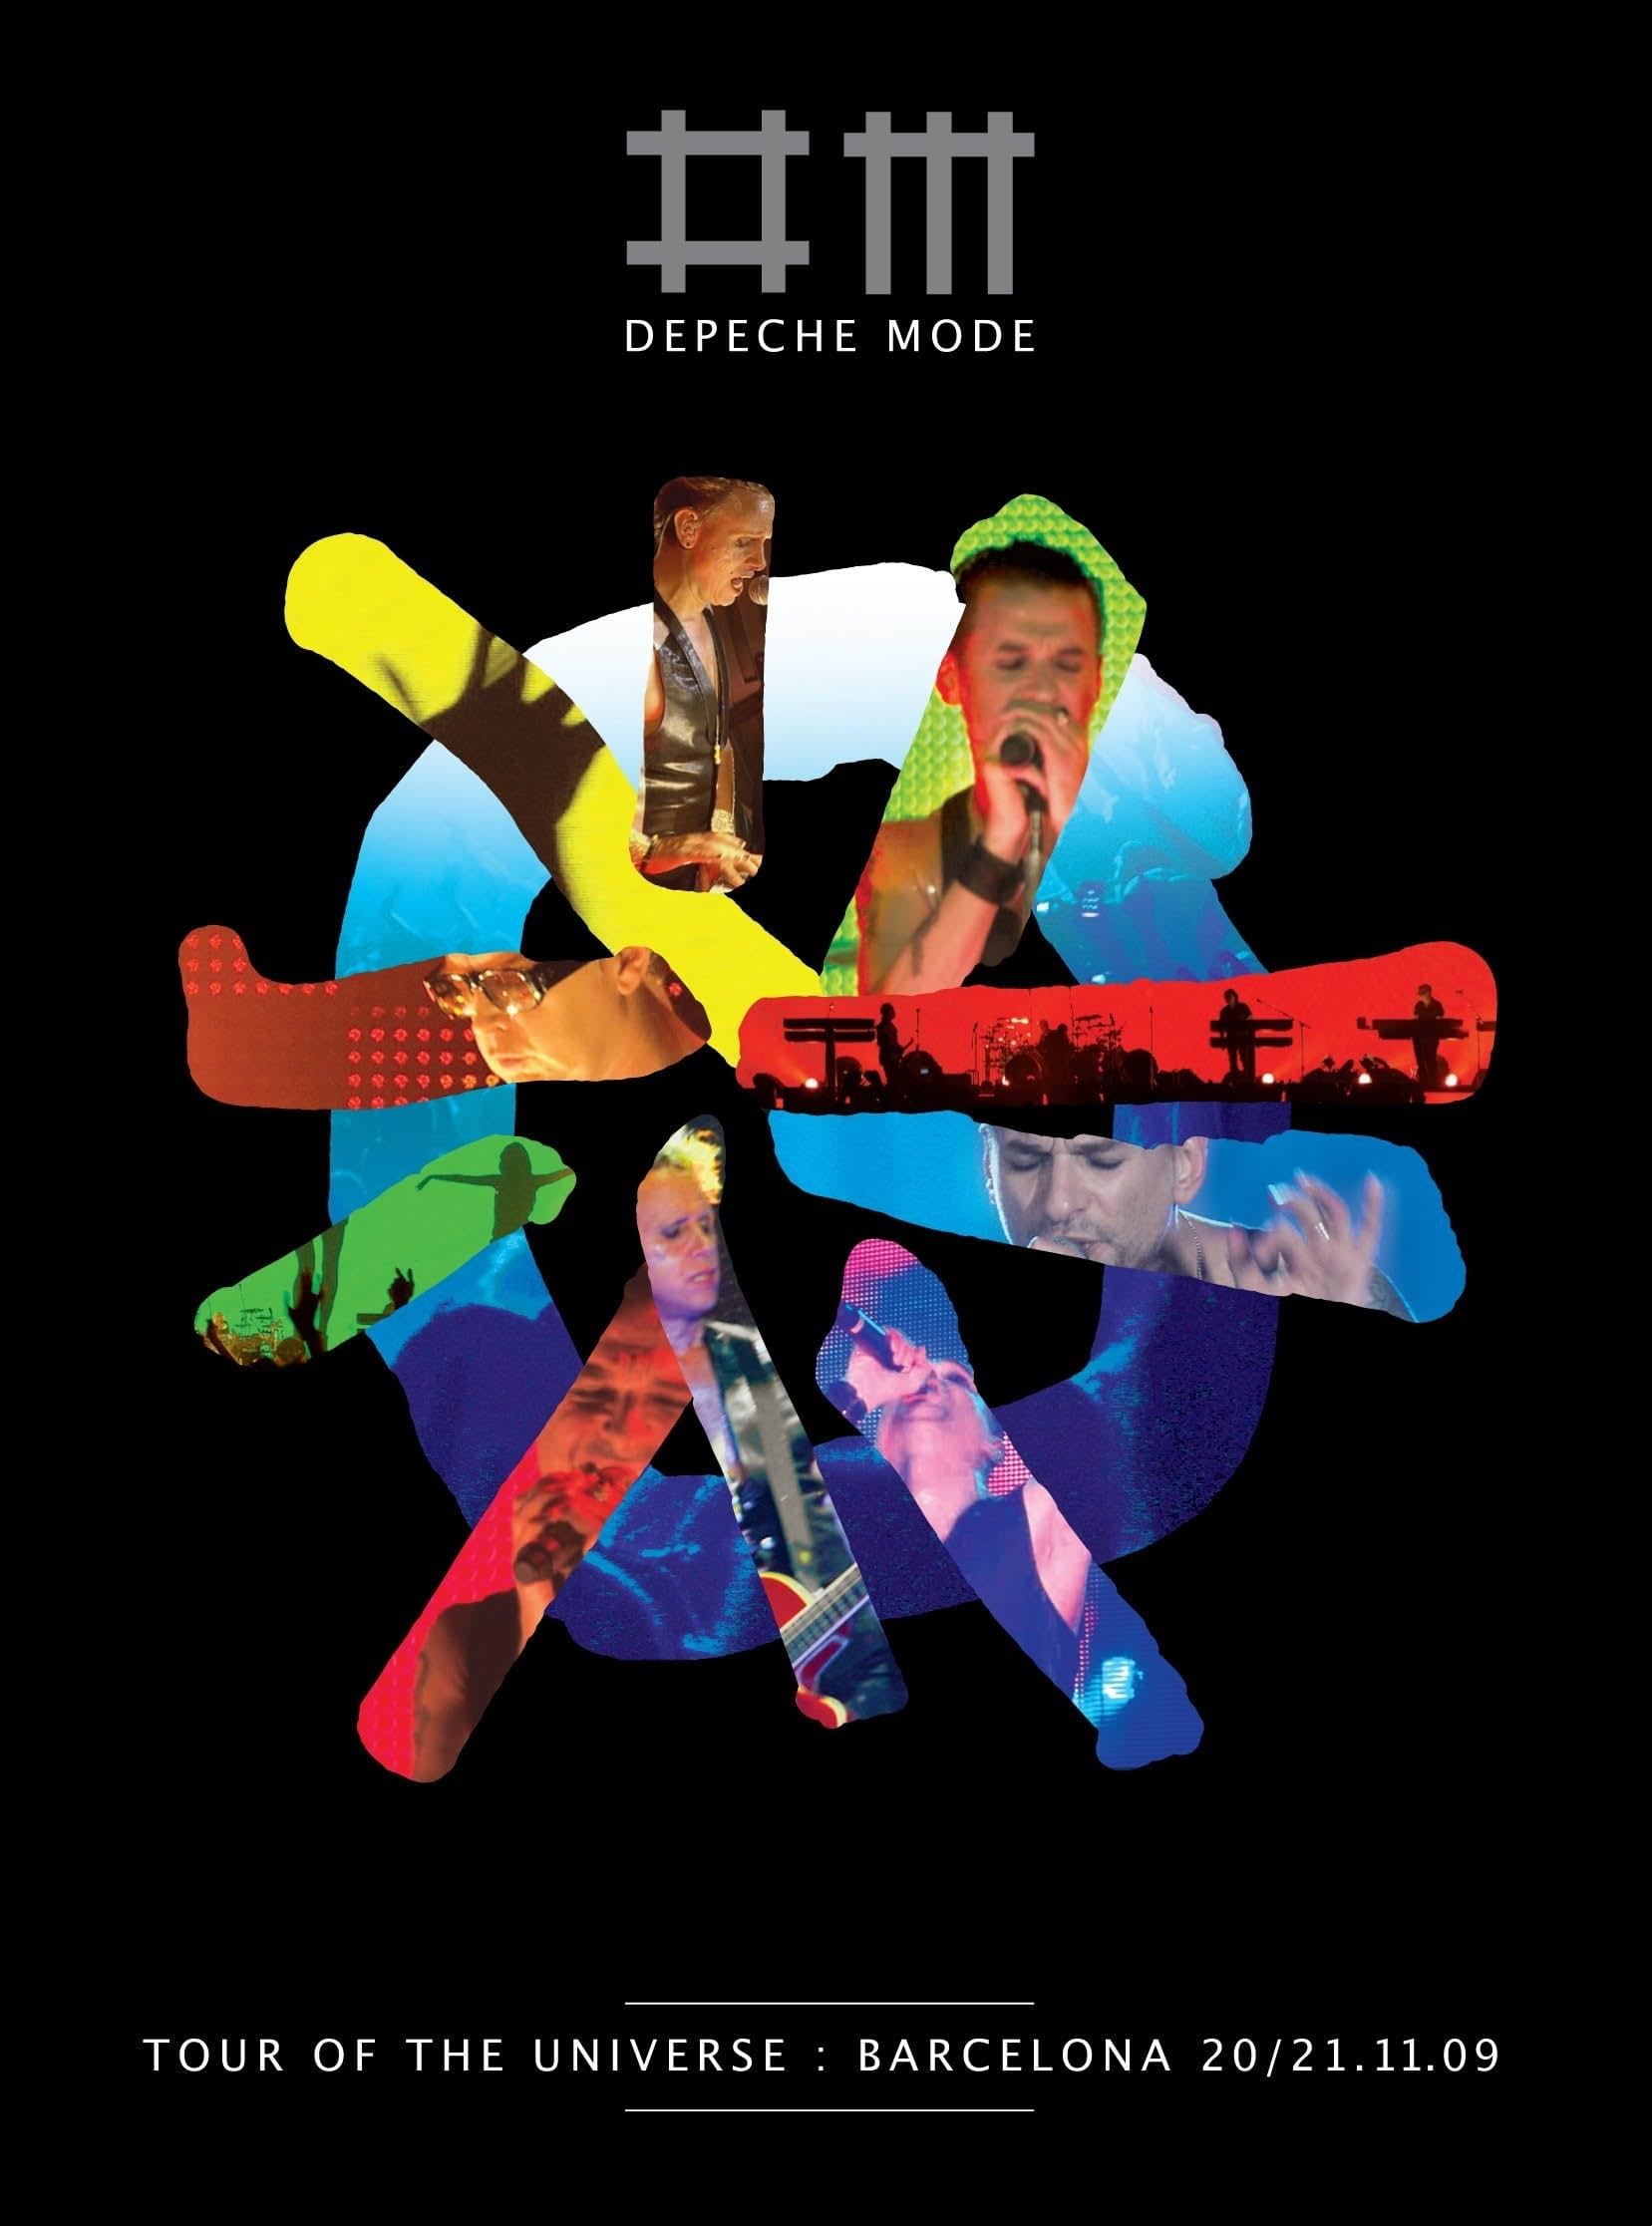     Depeche Mode: Tour of the Universe - Barcelona 20/21.11.09